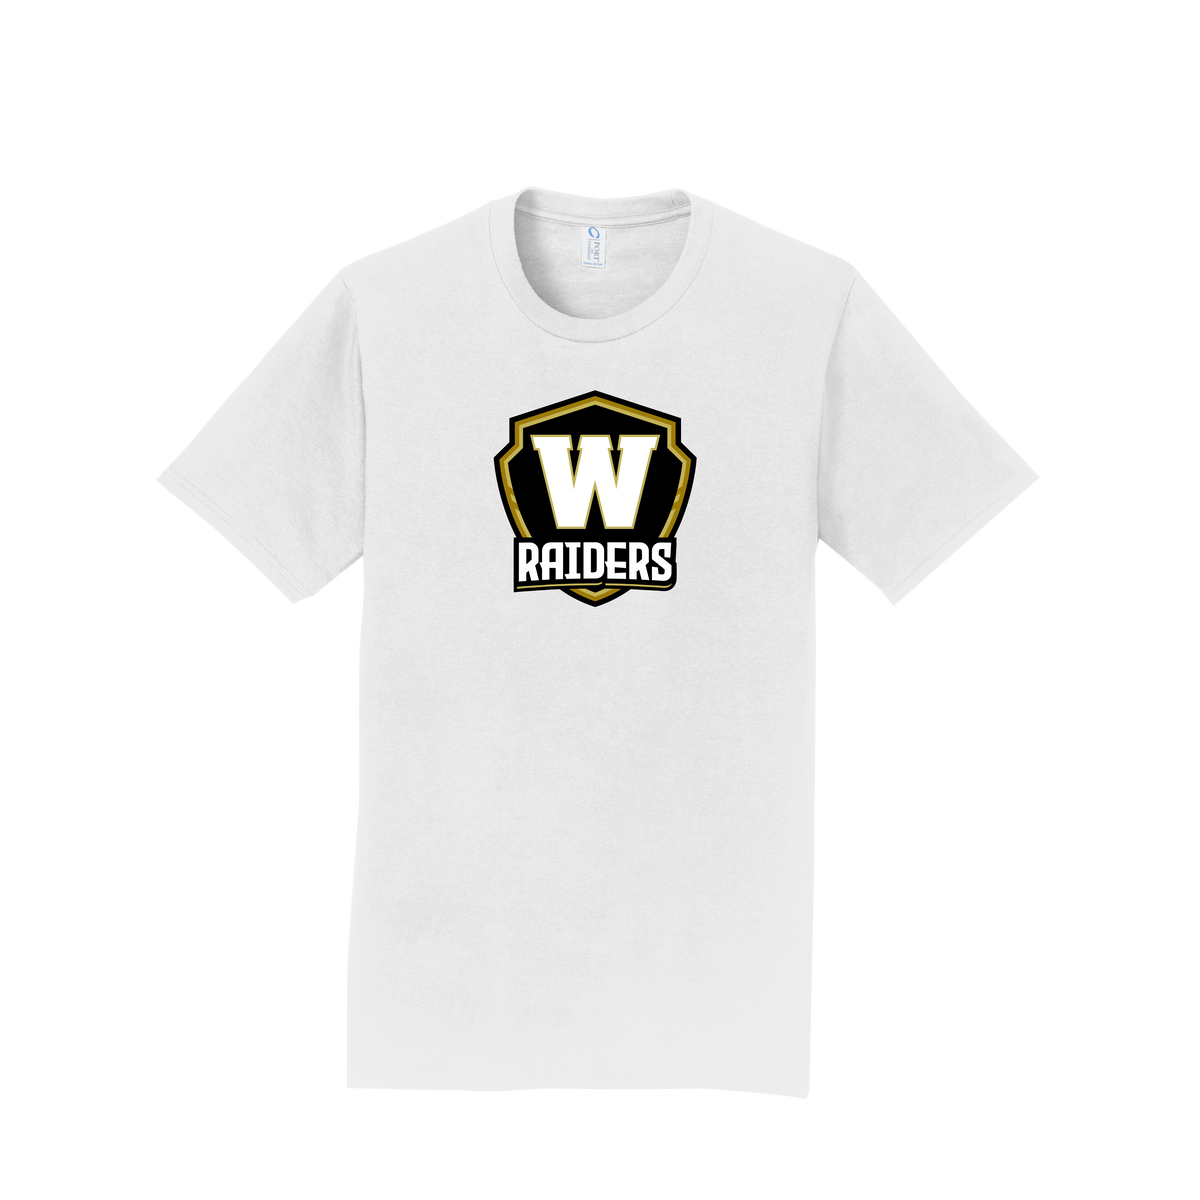 Warren City Schools | DTF | Unisex Short Sleeve T-Shirt White